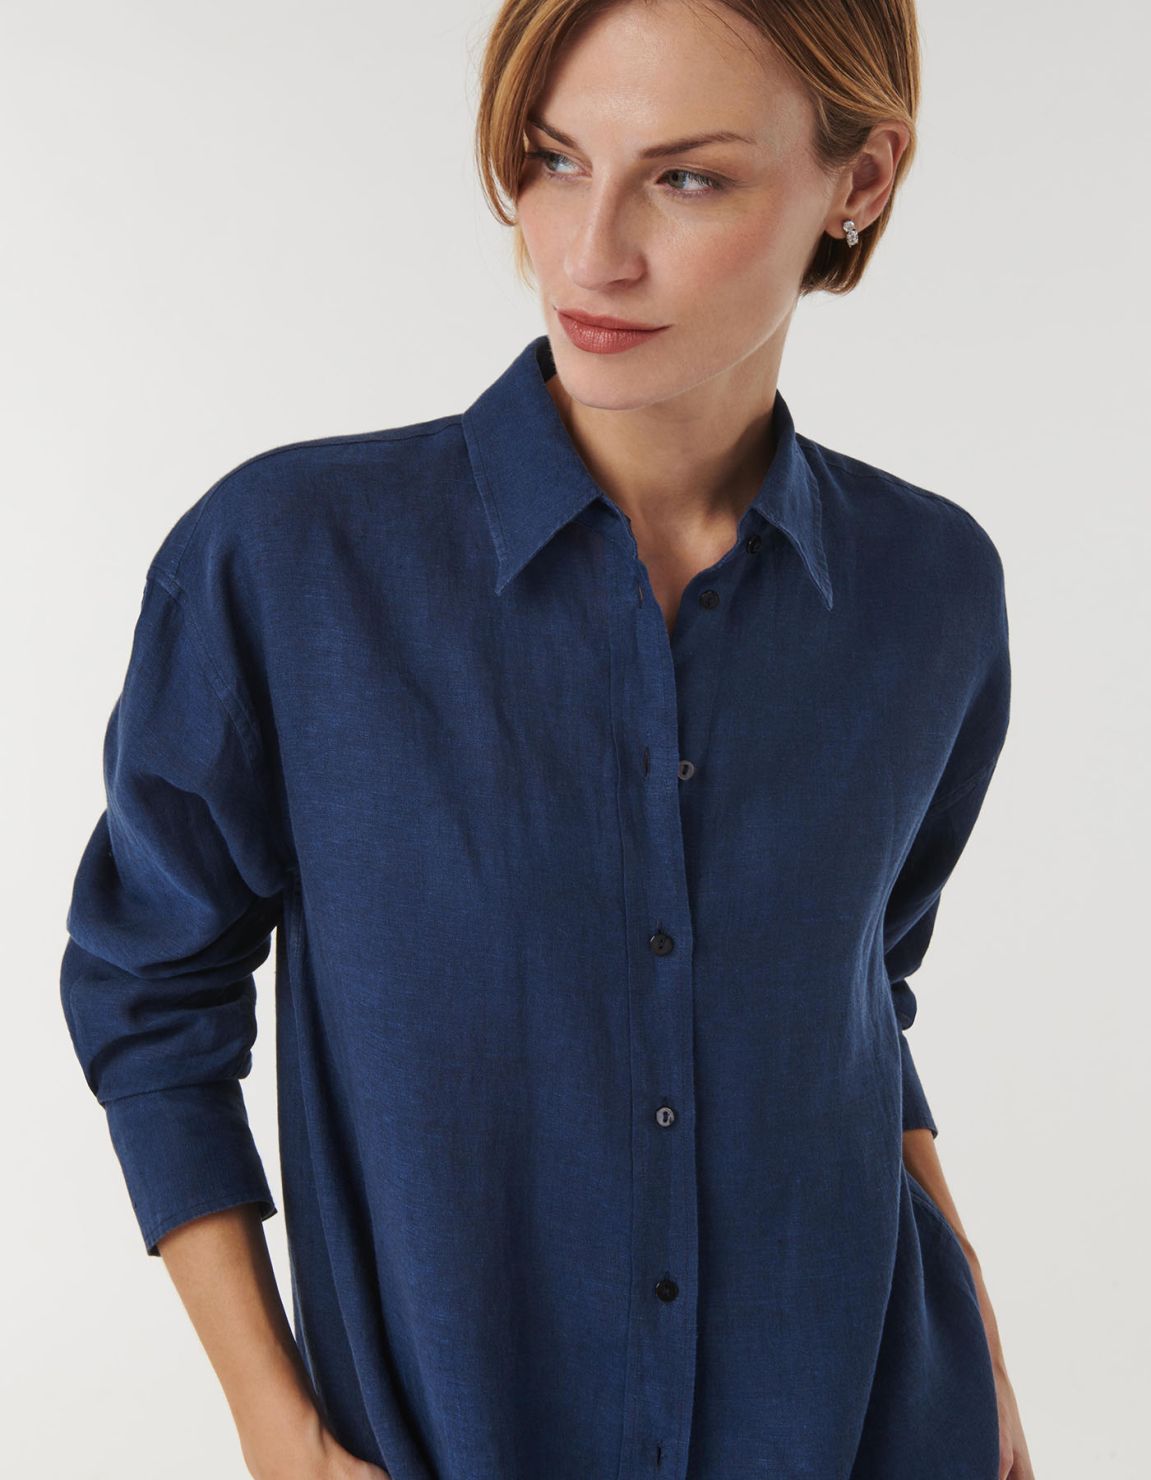 Shirt Navy Blue Linen Solid colour Over 5